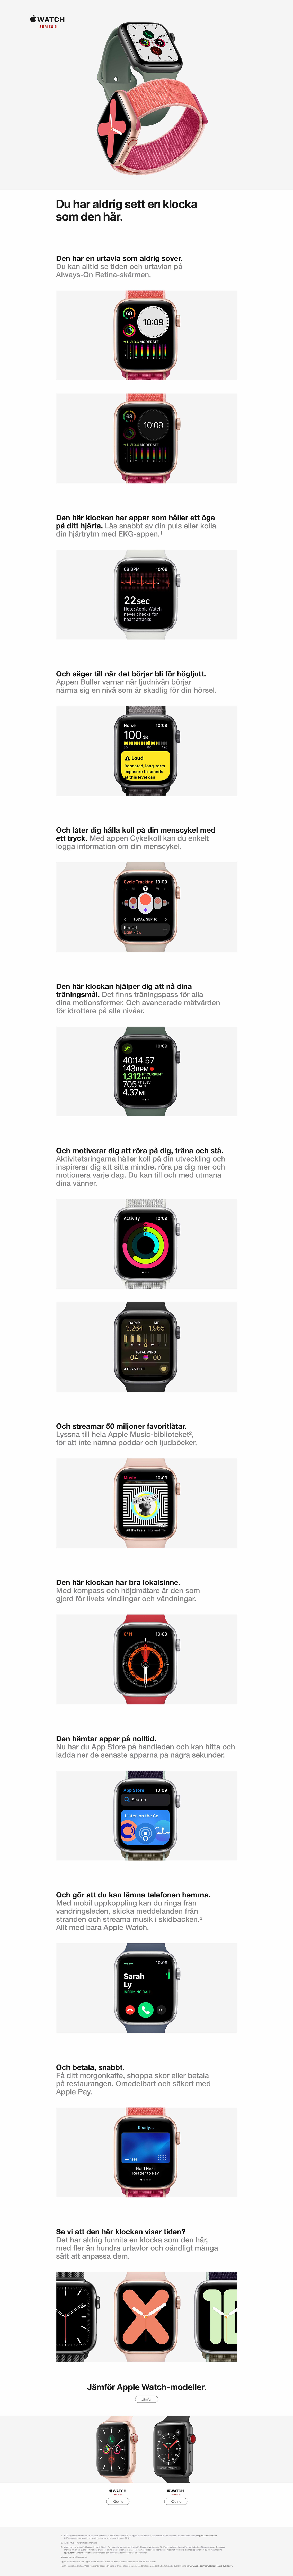 Apple Watch Series 5 produktbeskrivning